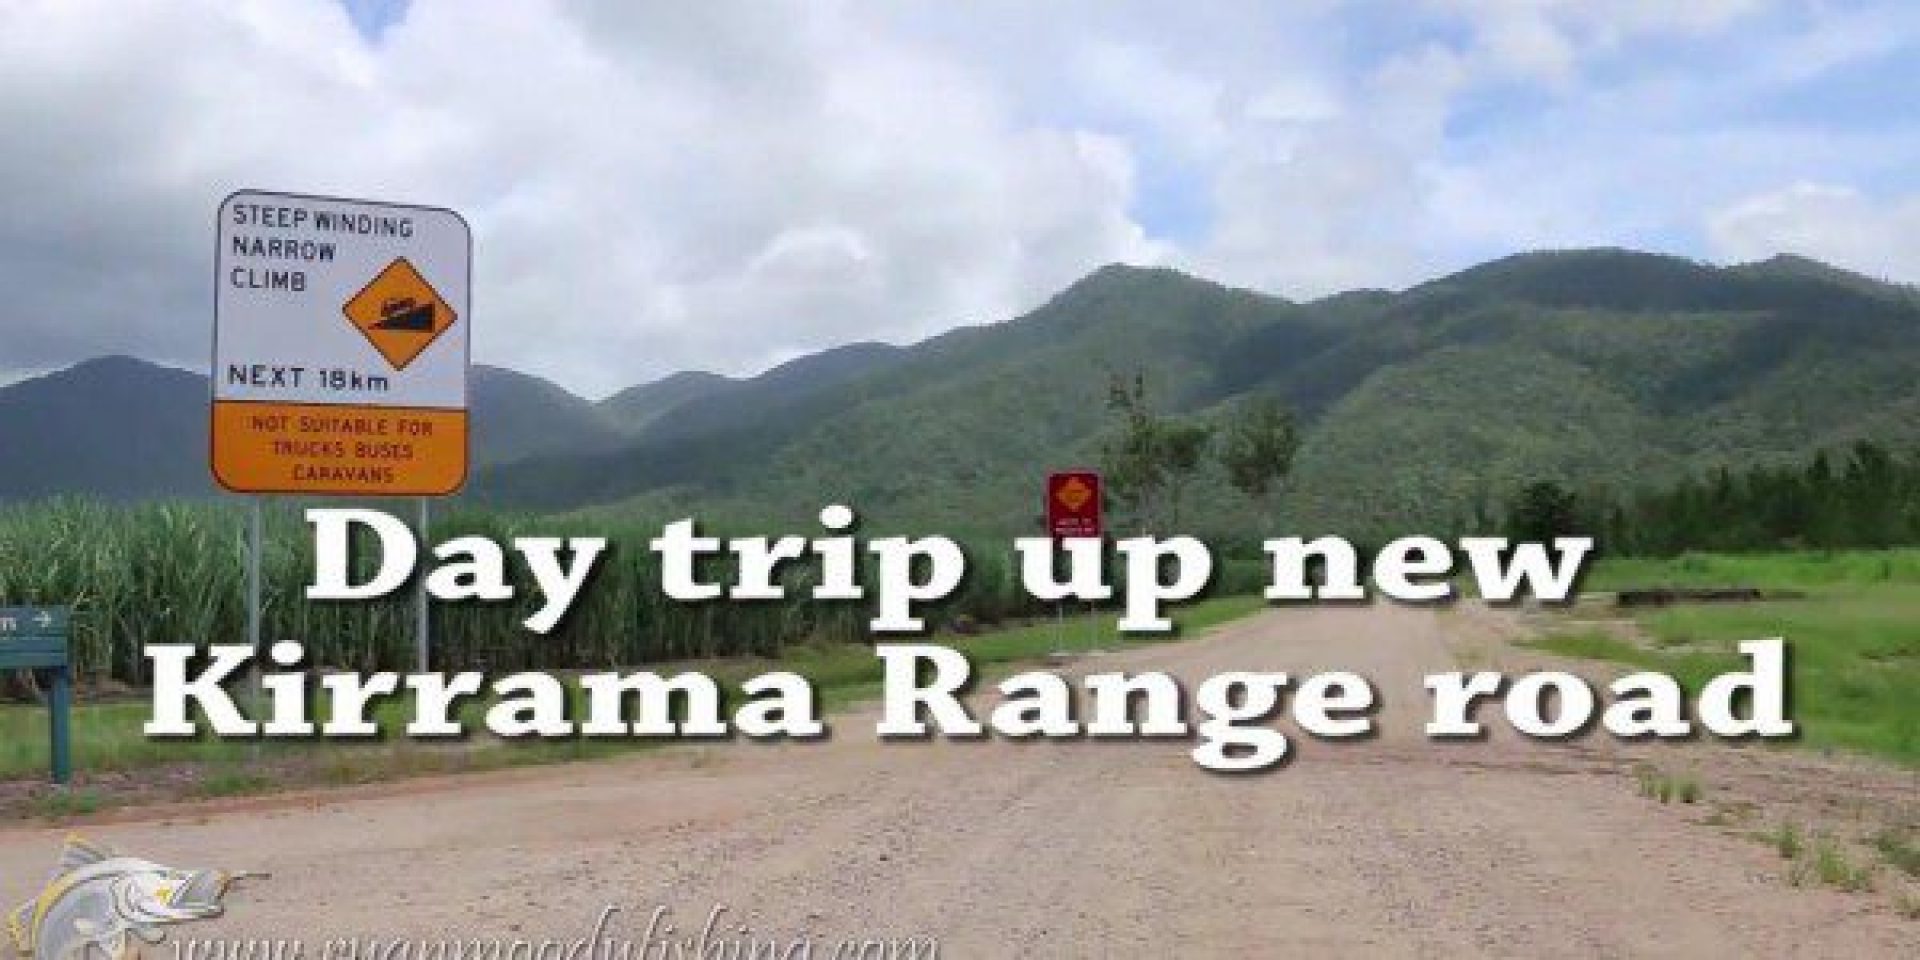 Kirrama-range-road1-600x300